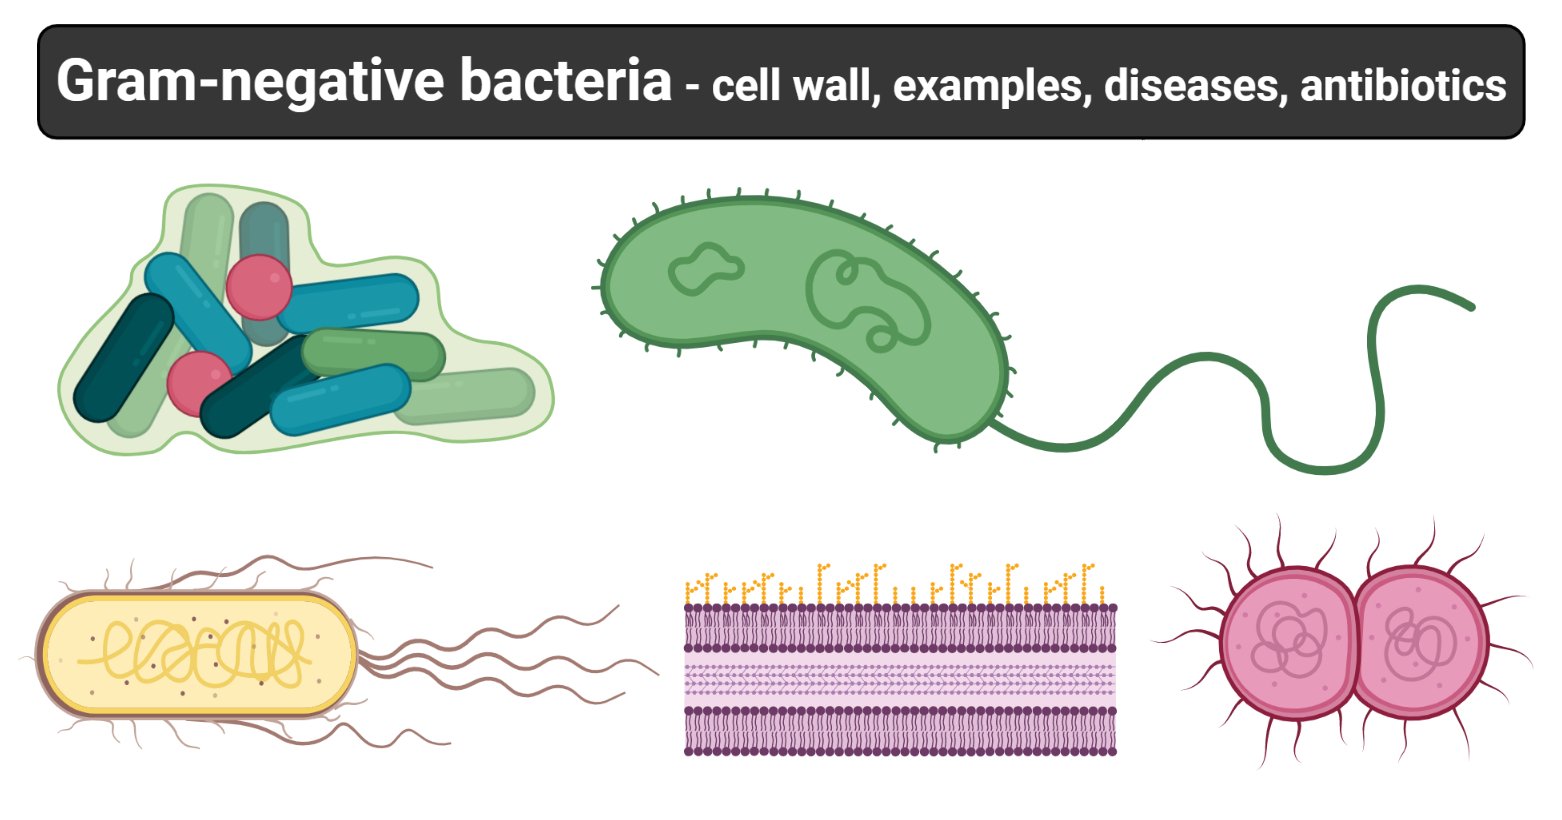 Gram-negative bacteria